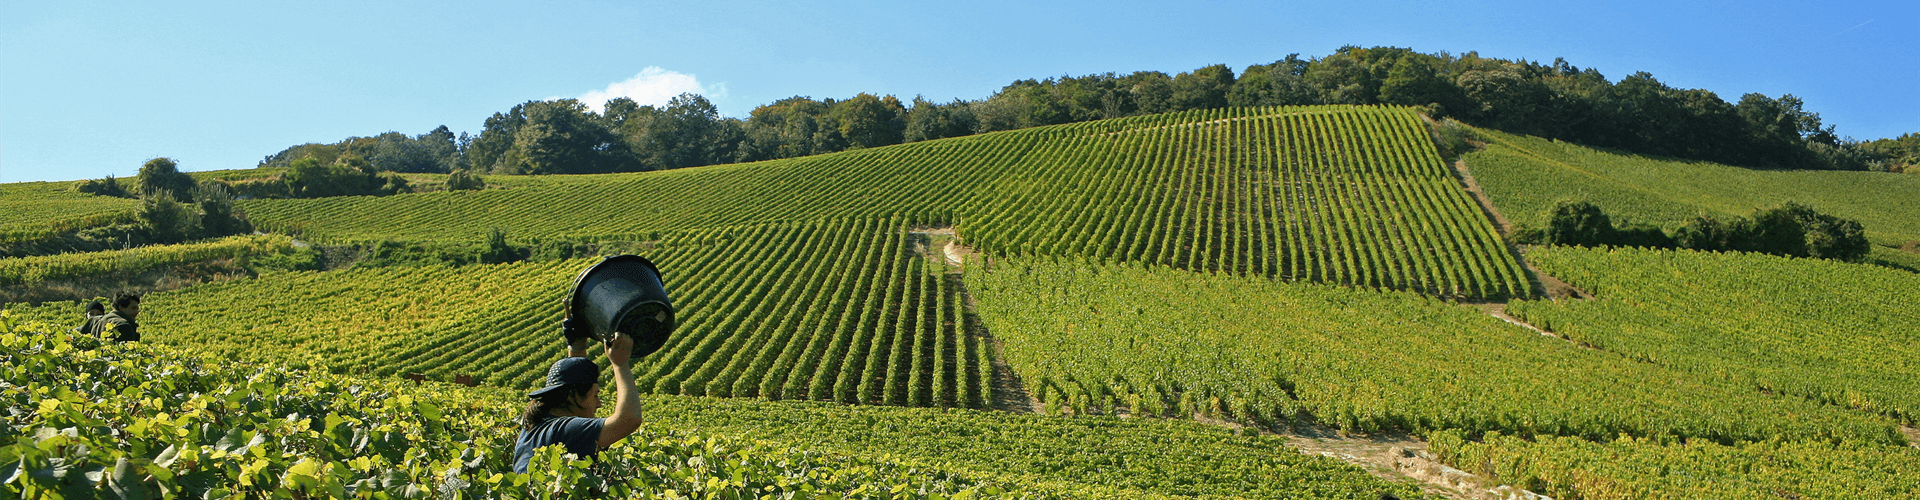 Vakantie in de Champagnestreek en de Franse Ardennen, in Noord Frankrijk